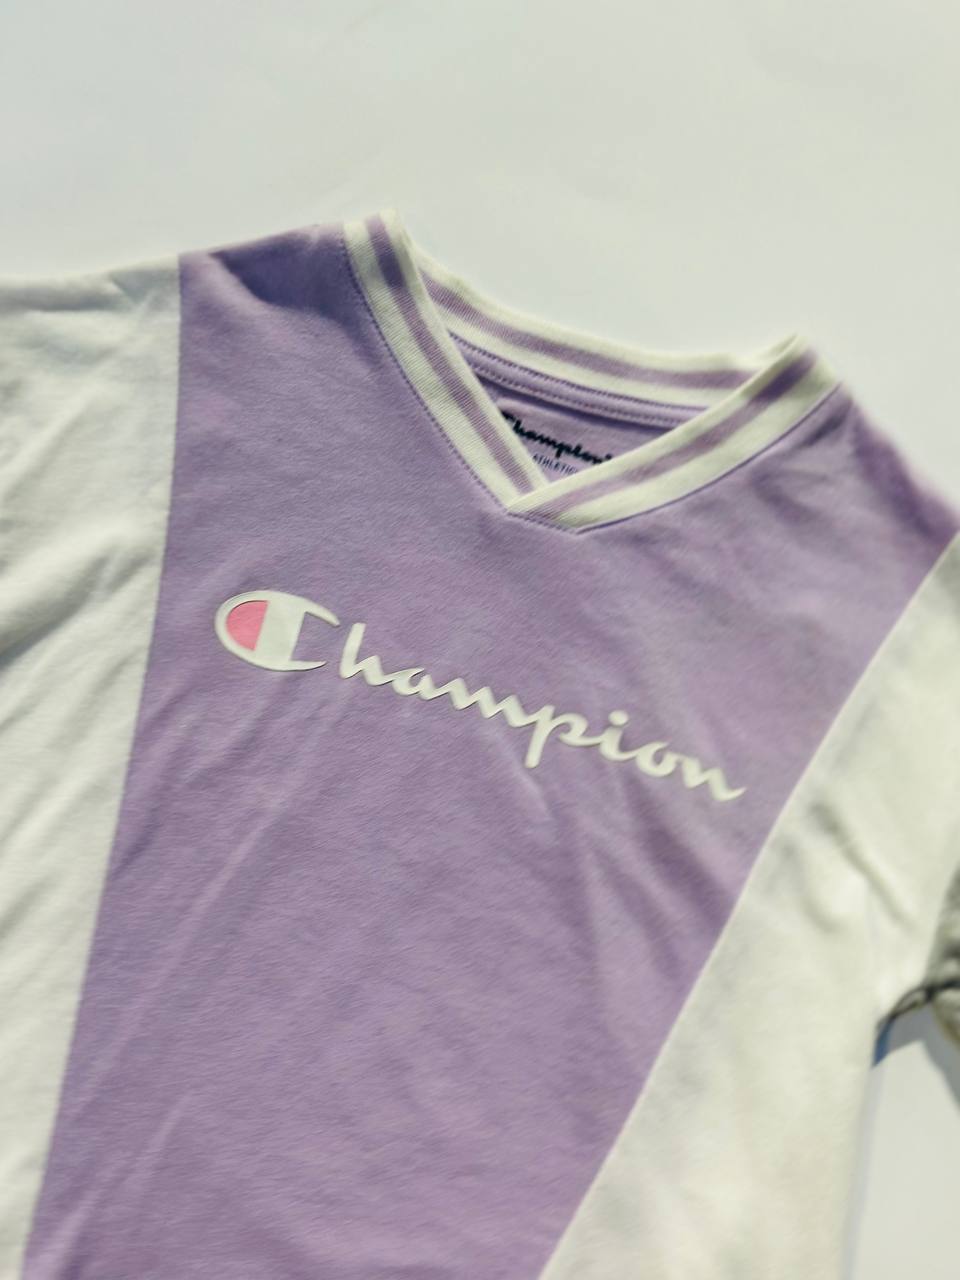 Champions kids shirt